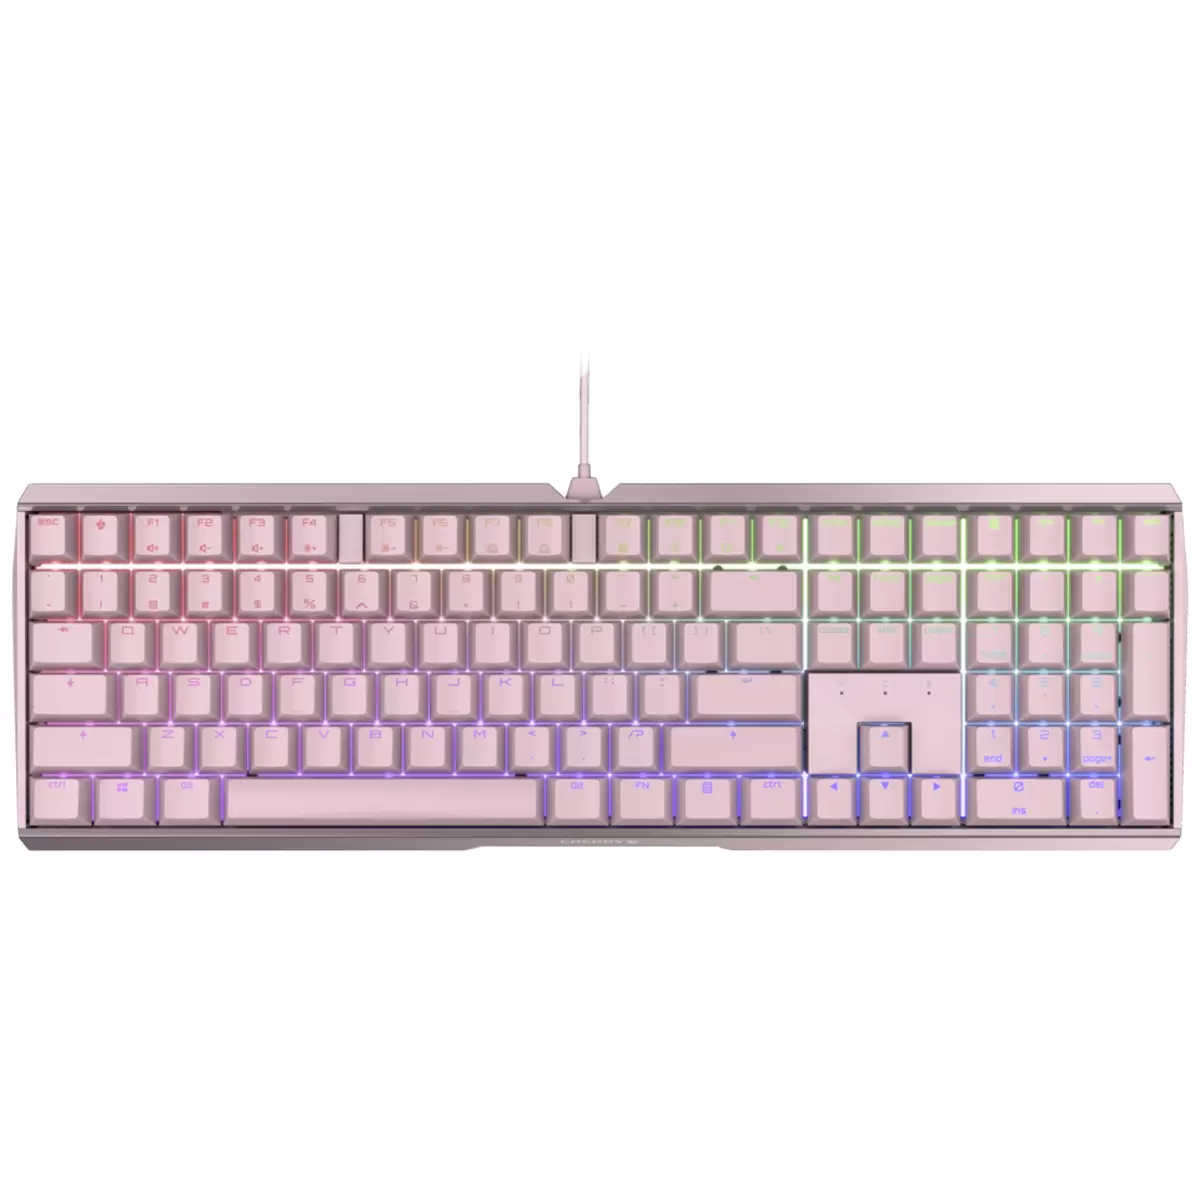 CHERRY MX 3.0S RGB Gaming Keyboard (Pink)  G80-3874HUAEU-9